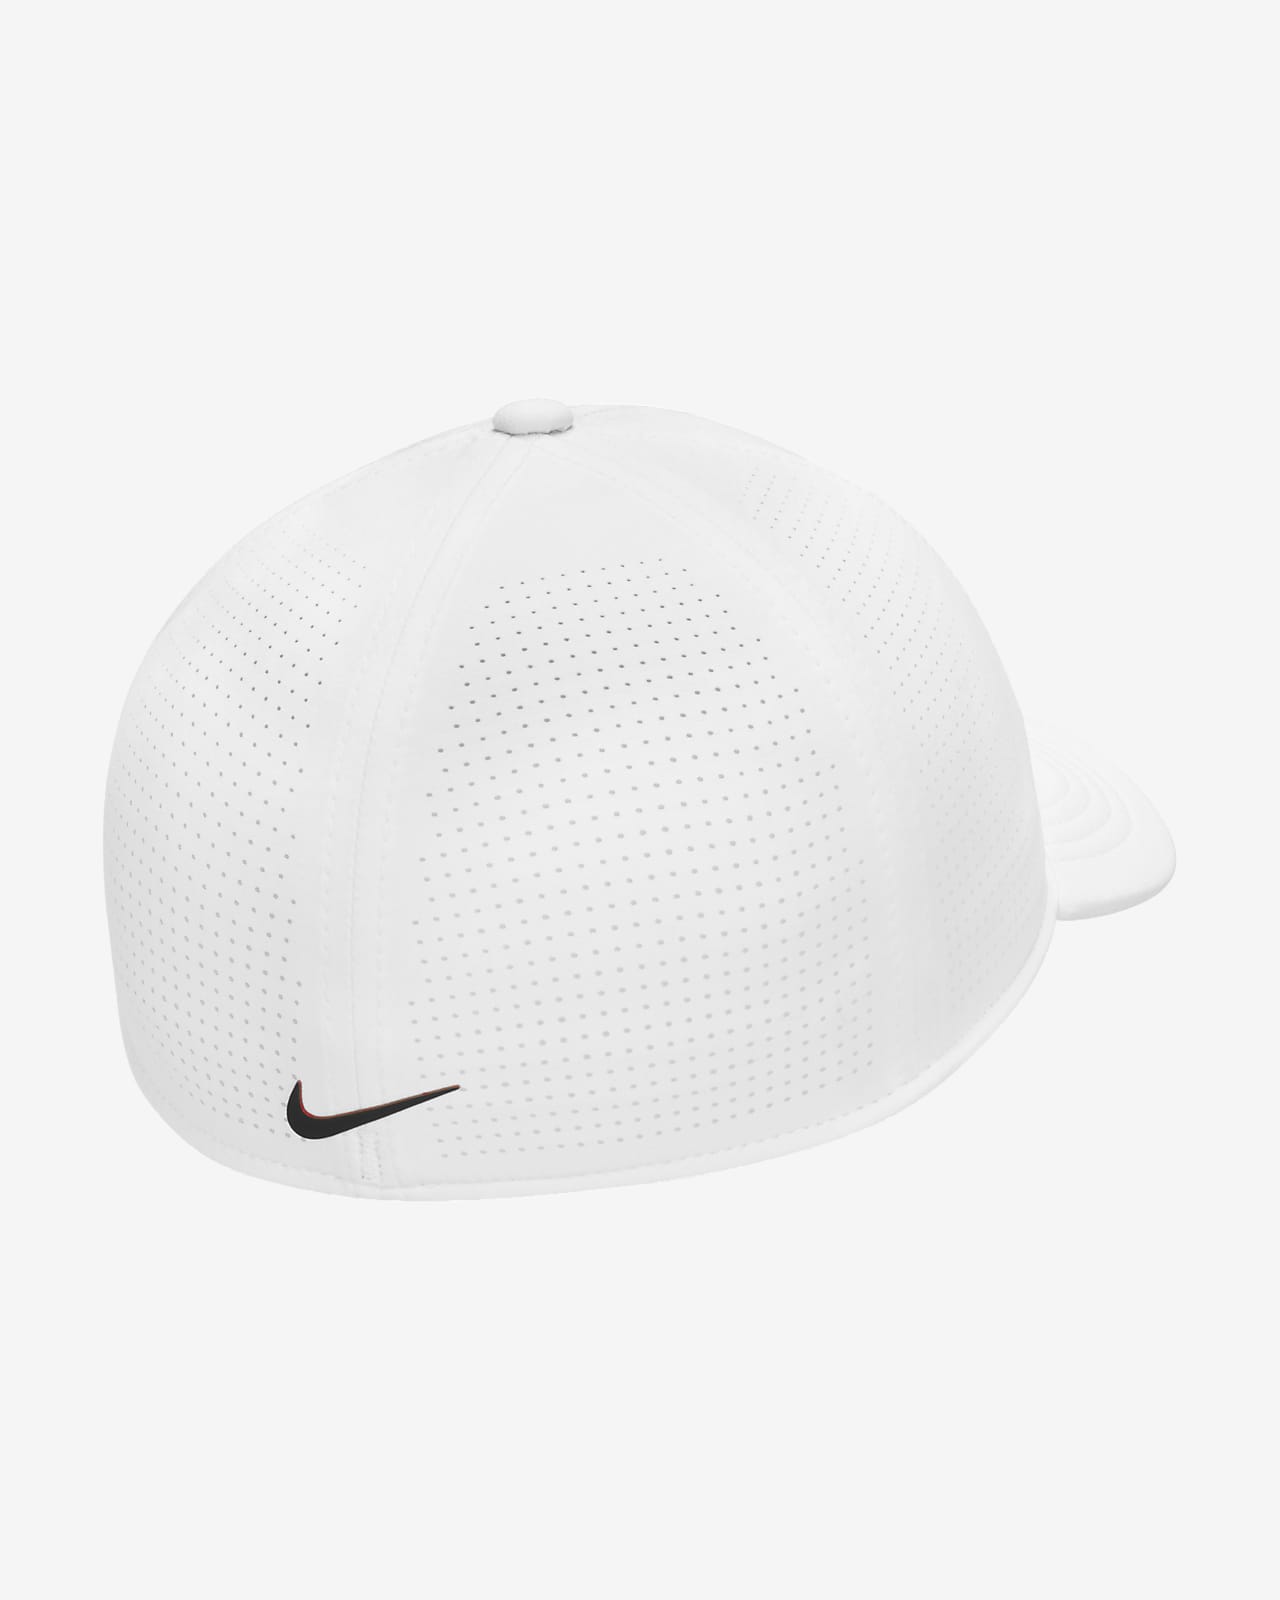 Nike Legacy 91 Dri-fit Golf Cap in White for Men